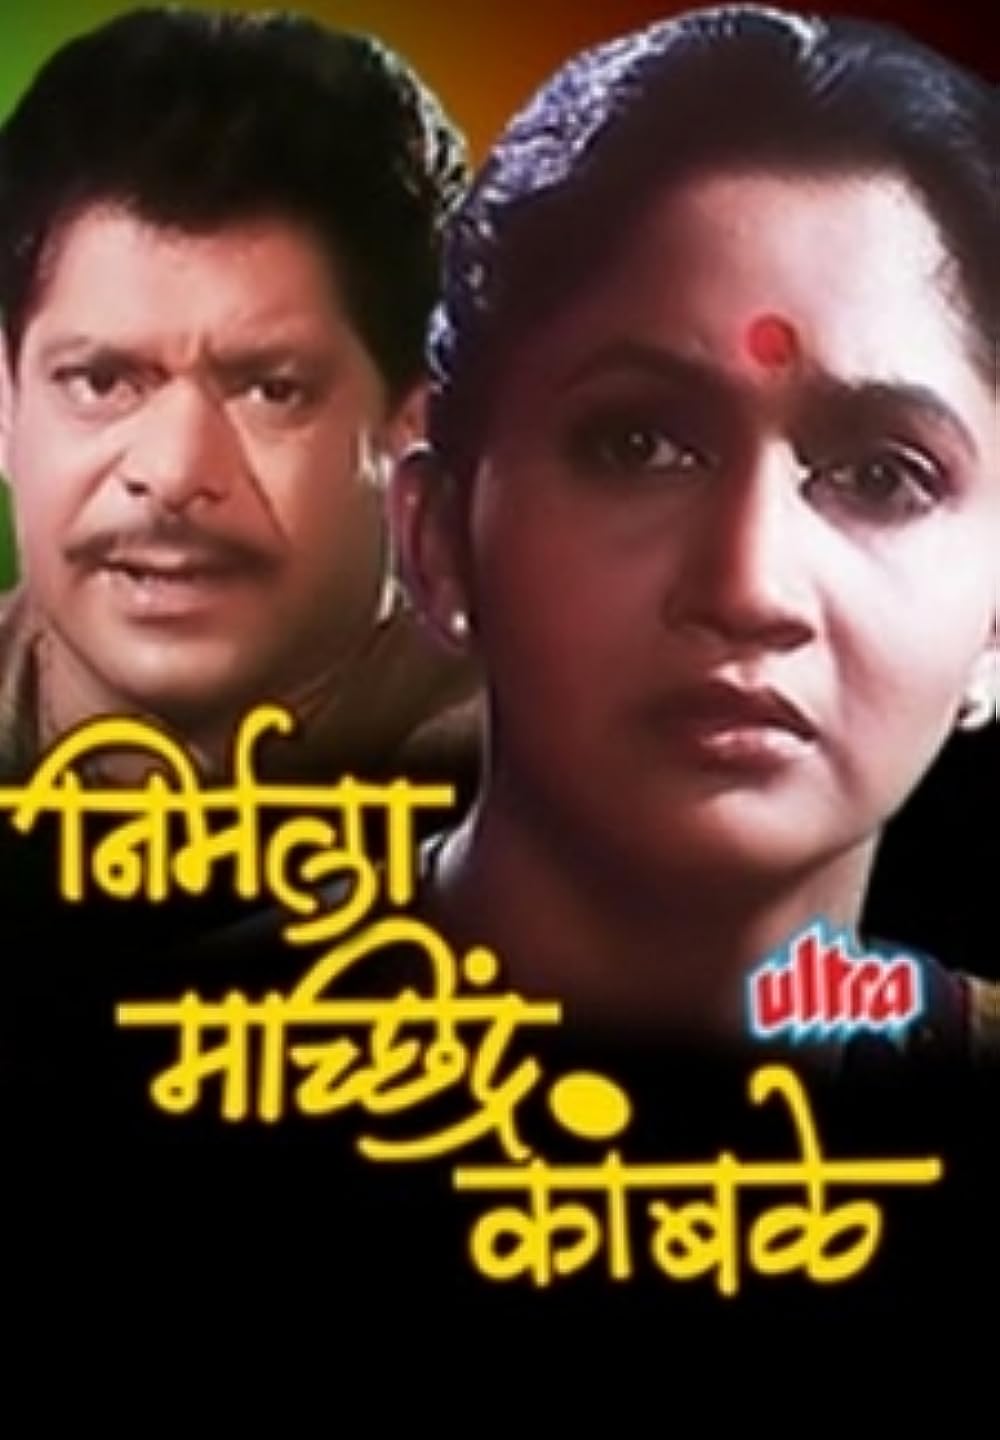 Poster of the film Nirmala Machhindra Kamble